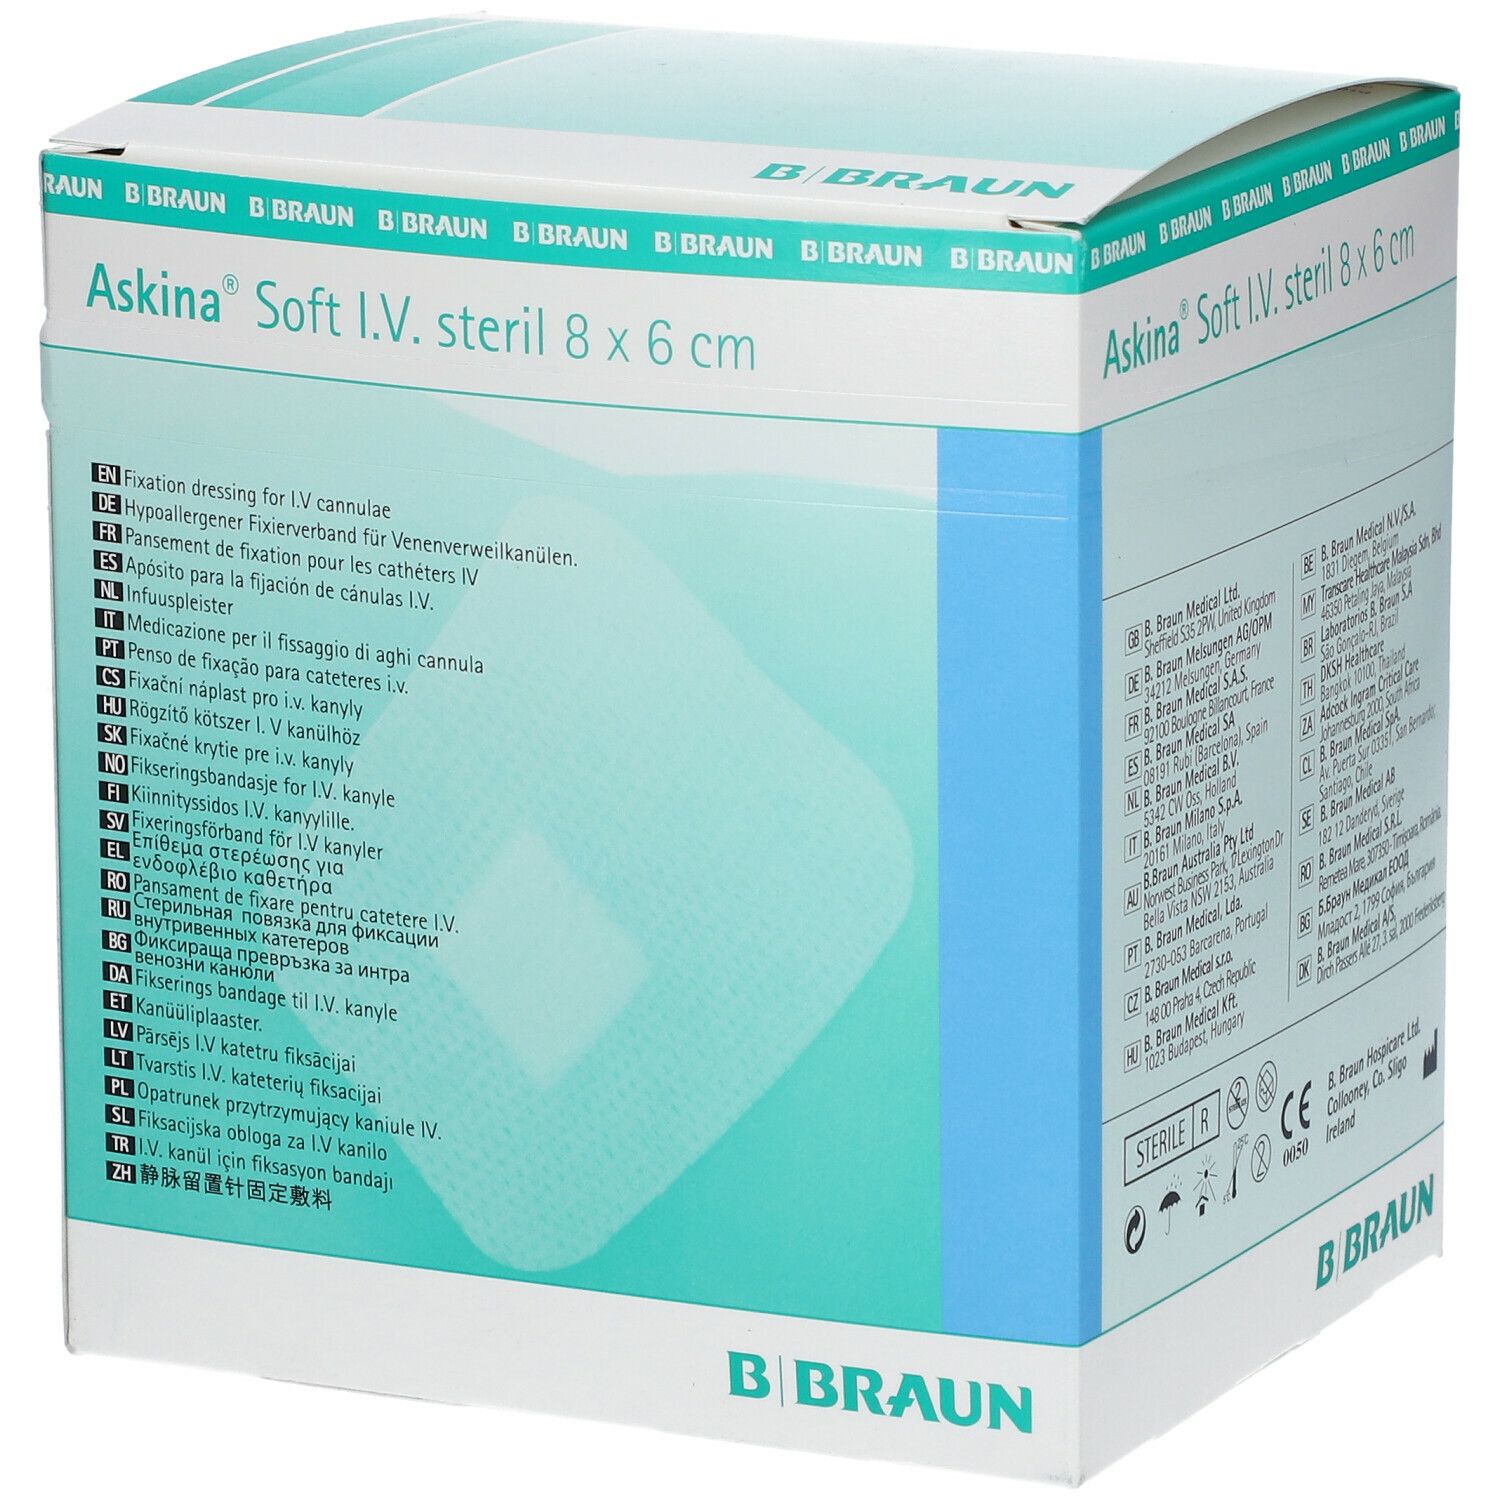 Askina® Soft I.V. steril Wundverband 8 x 6 cm